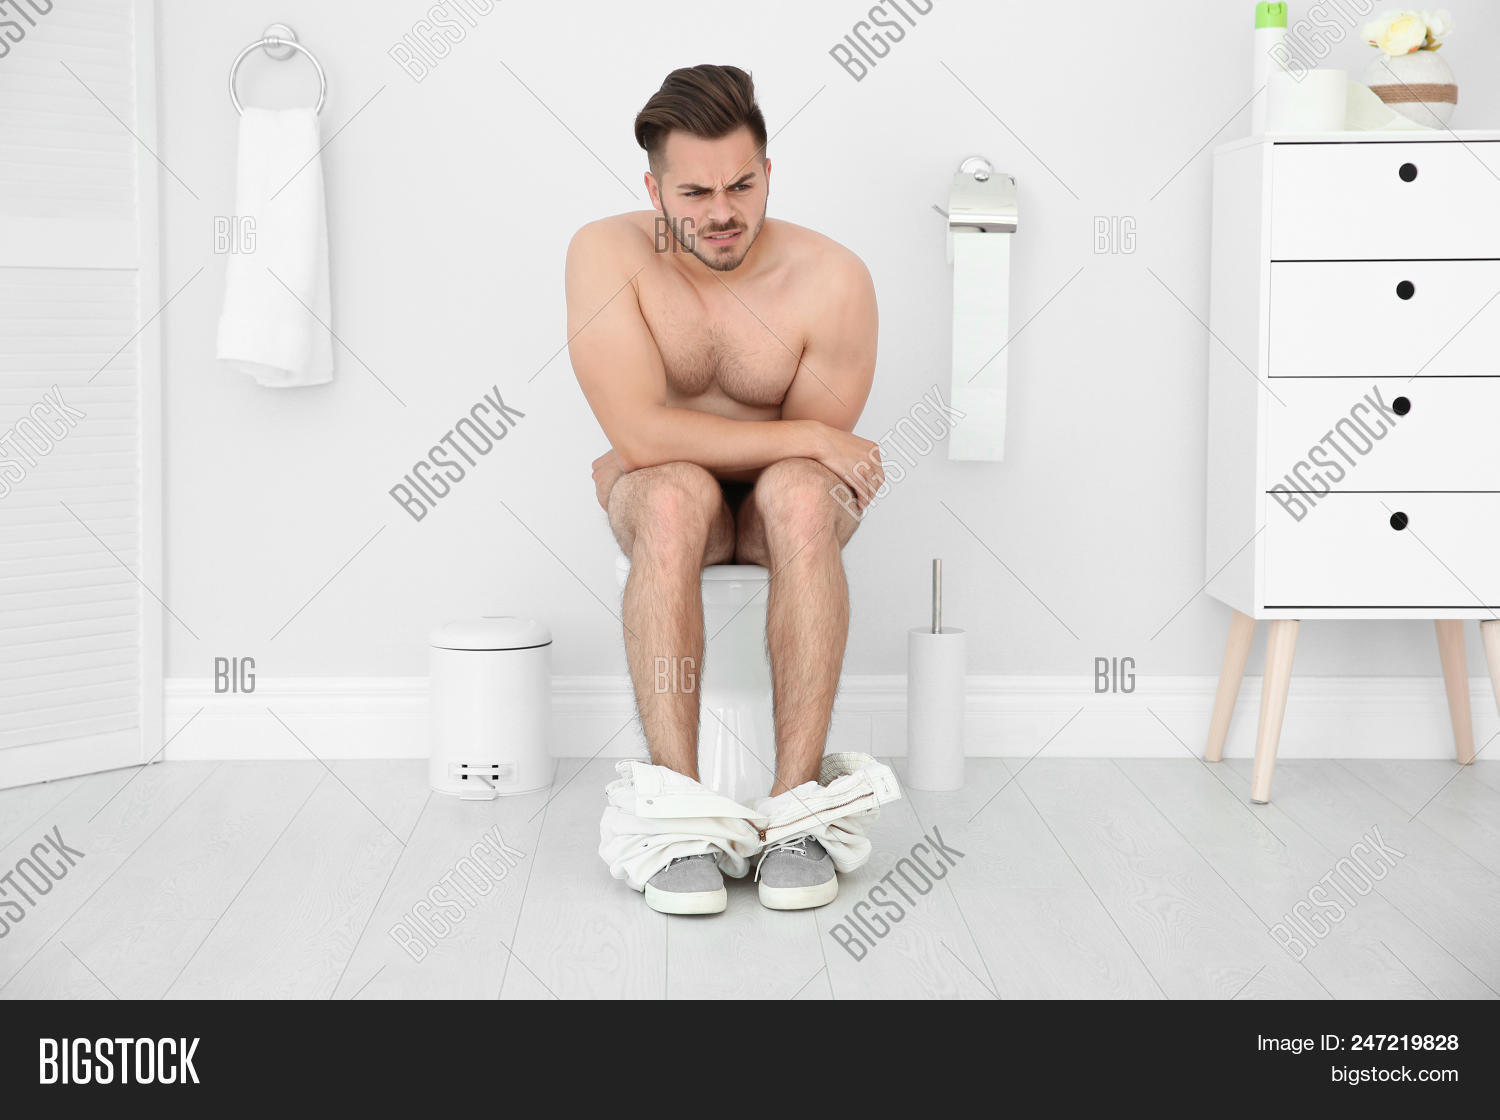 Naked Men On Toilet horse hd